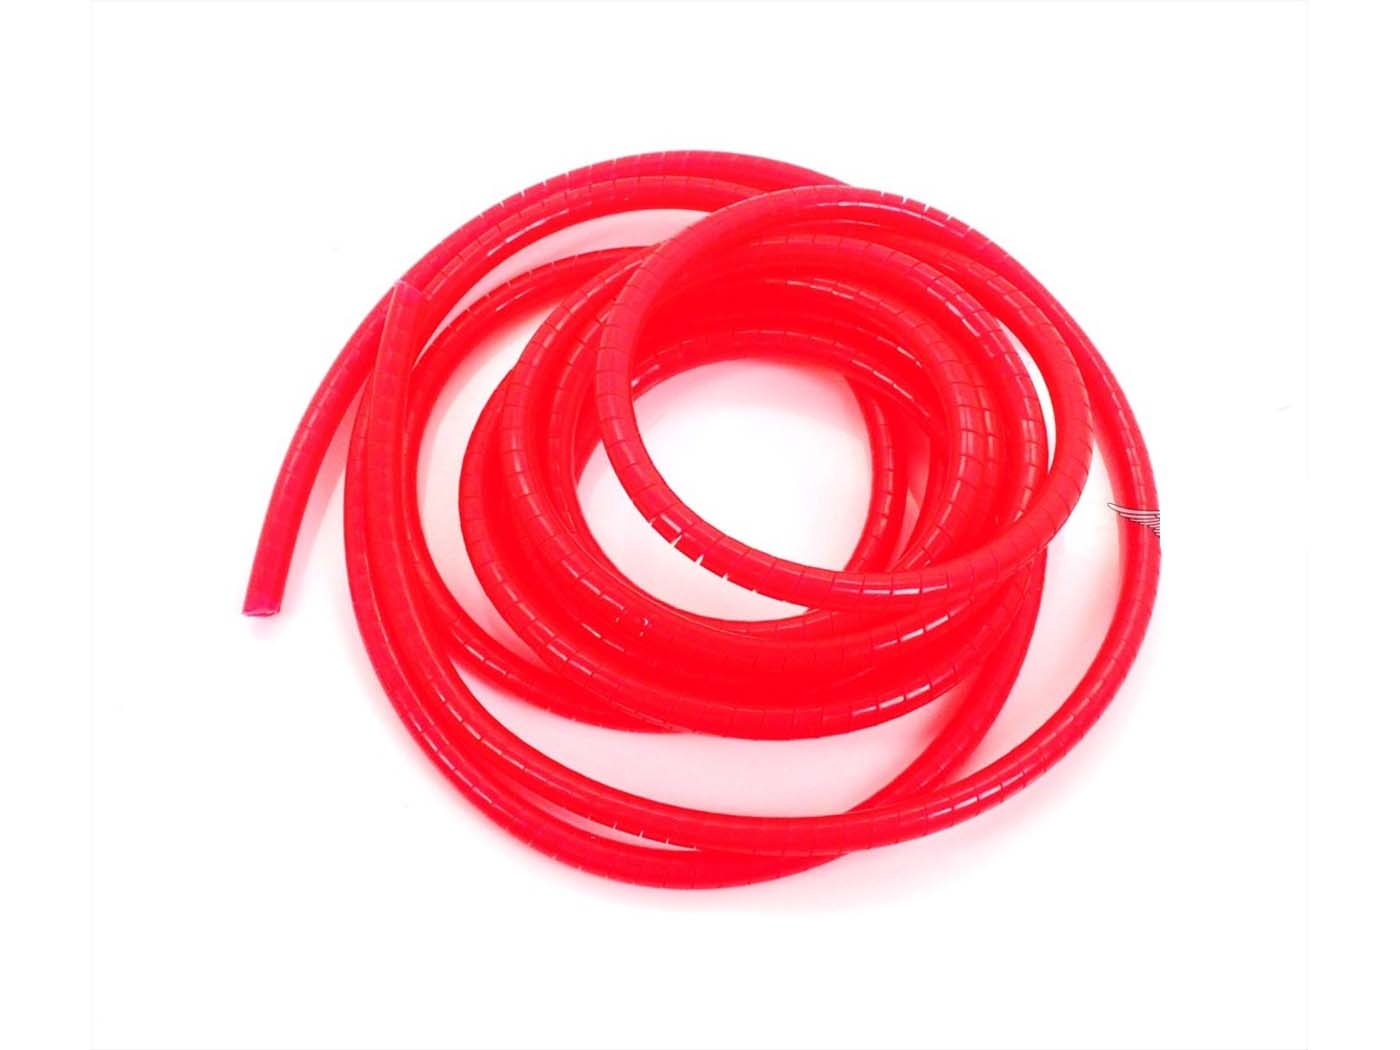 Schutzhülle spiralförmig 2m 6mm fluoreszierend rood voor Brommer Mokick